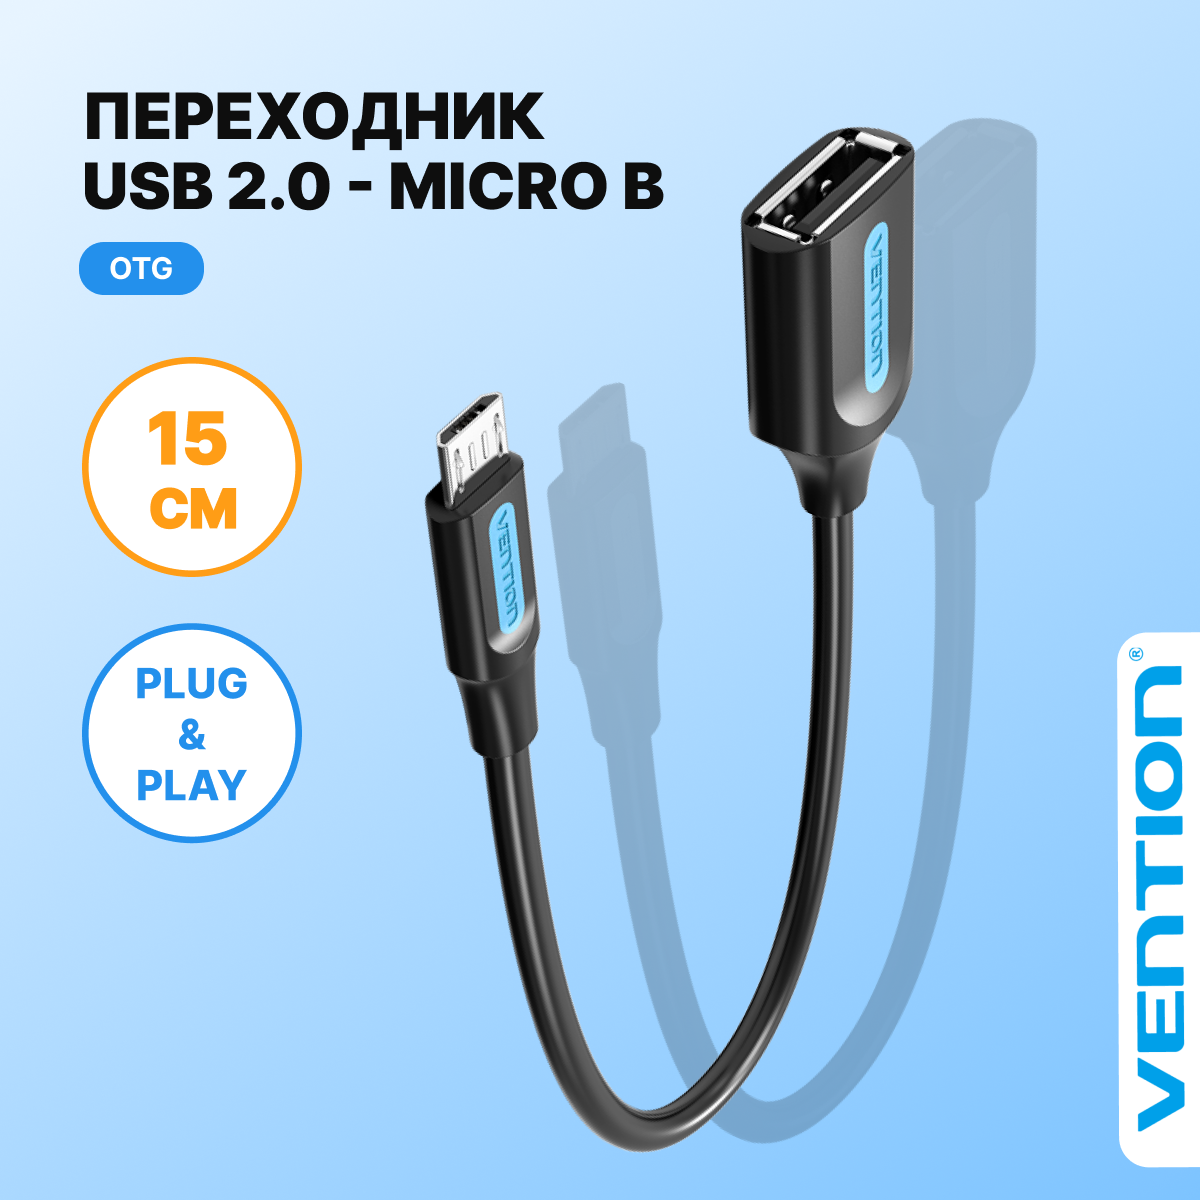 Vention Адаптер переходник OTG USB 2.0 AF (мама) на разъем micro B 5pin (папа) кабель 15 см арт. CCUBB